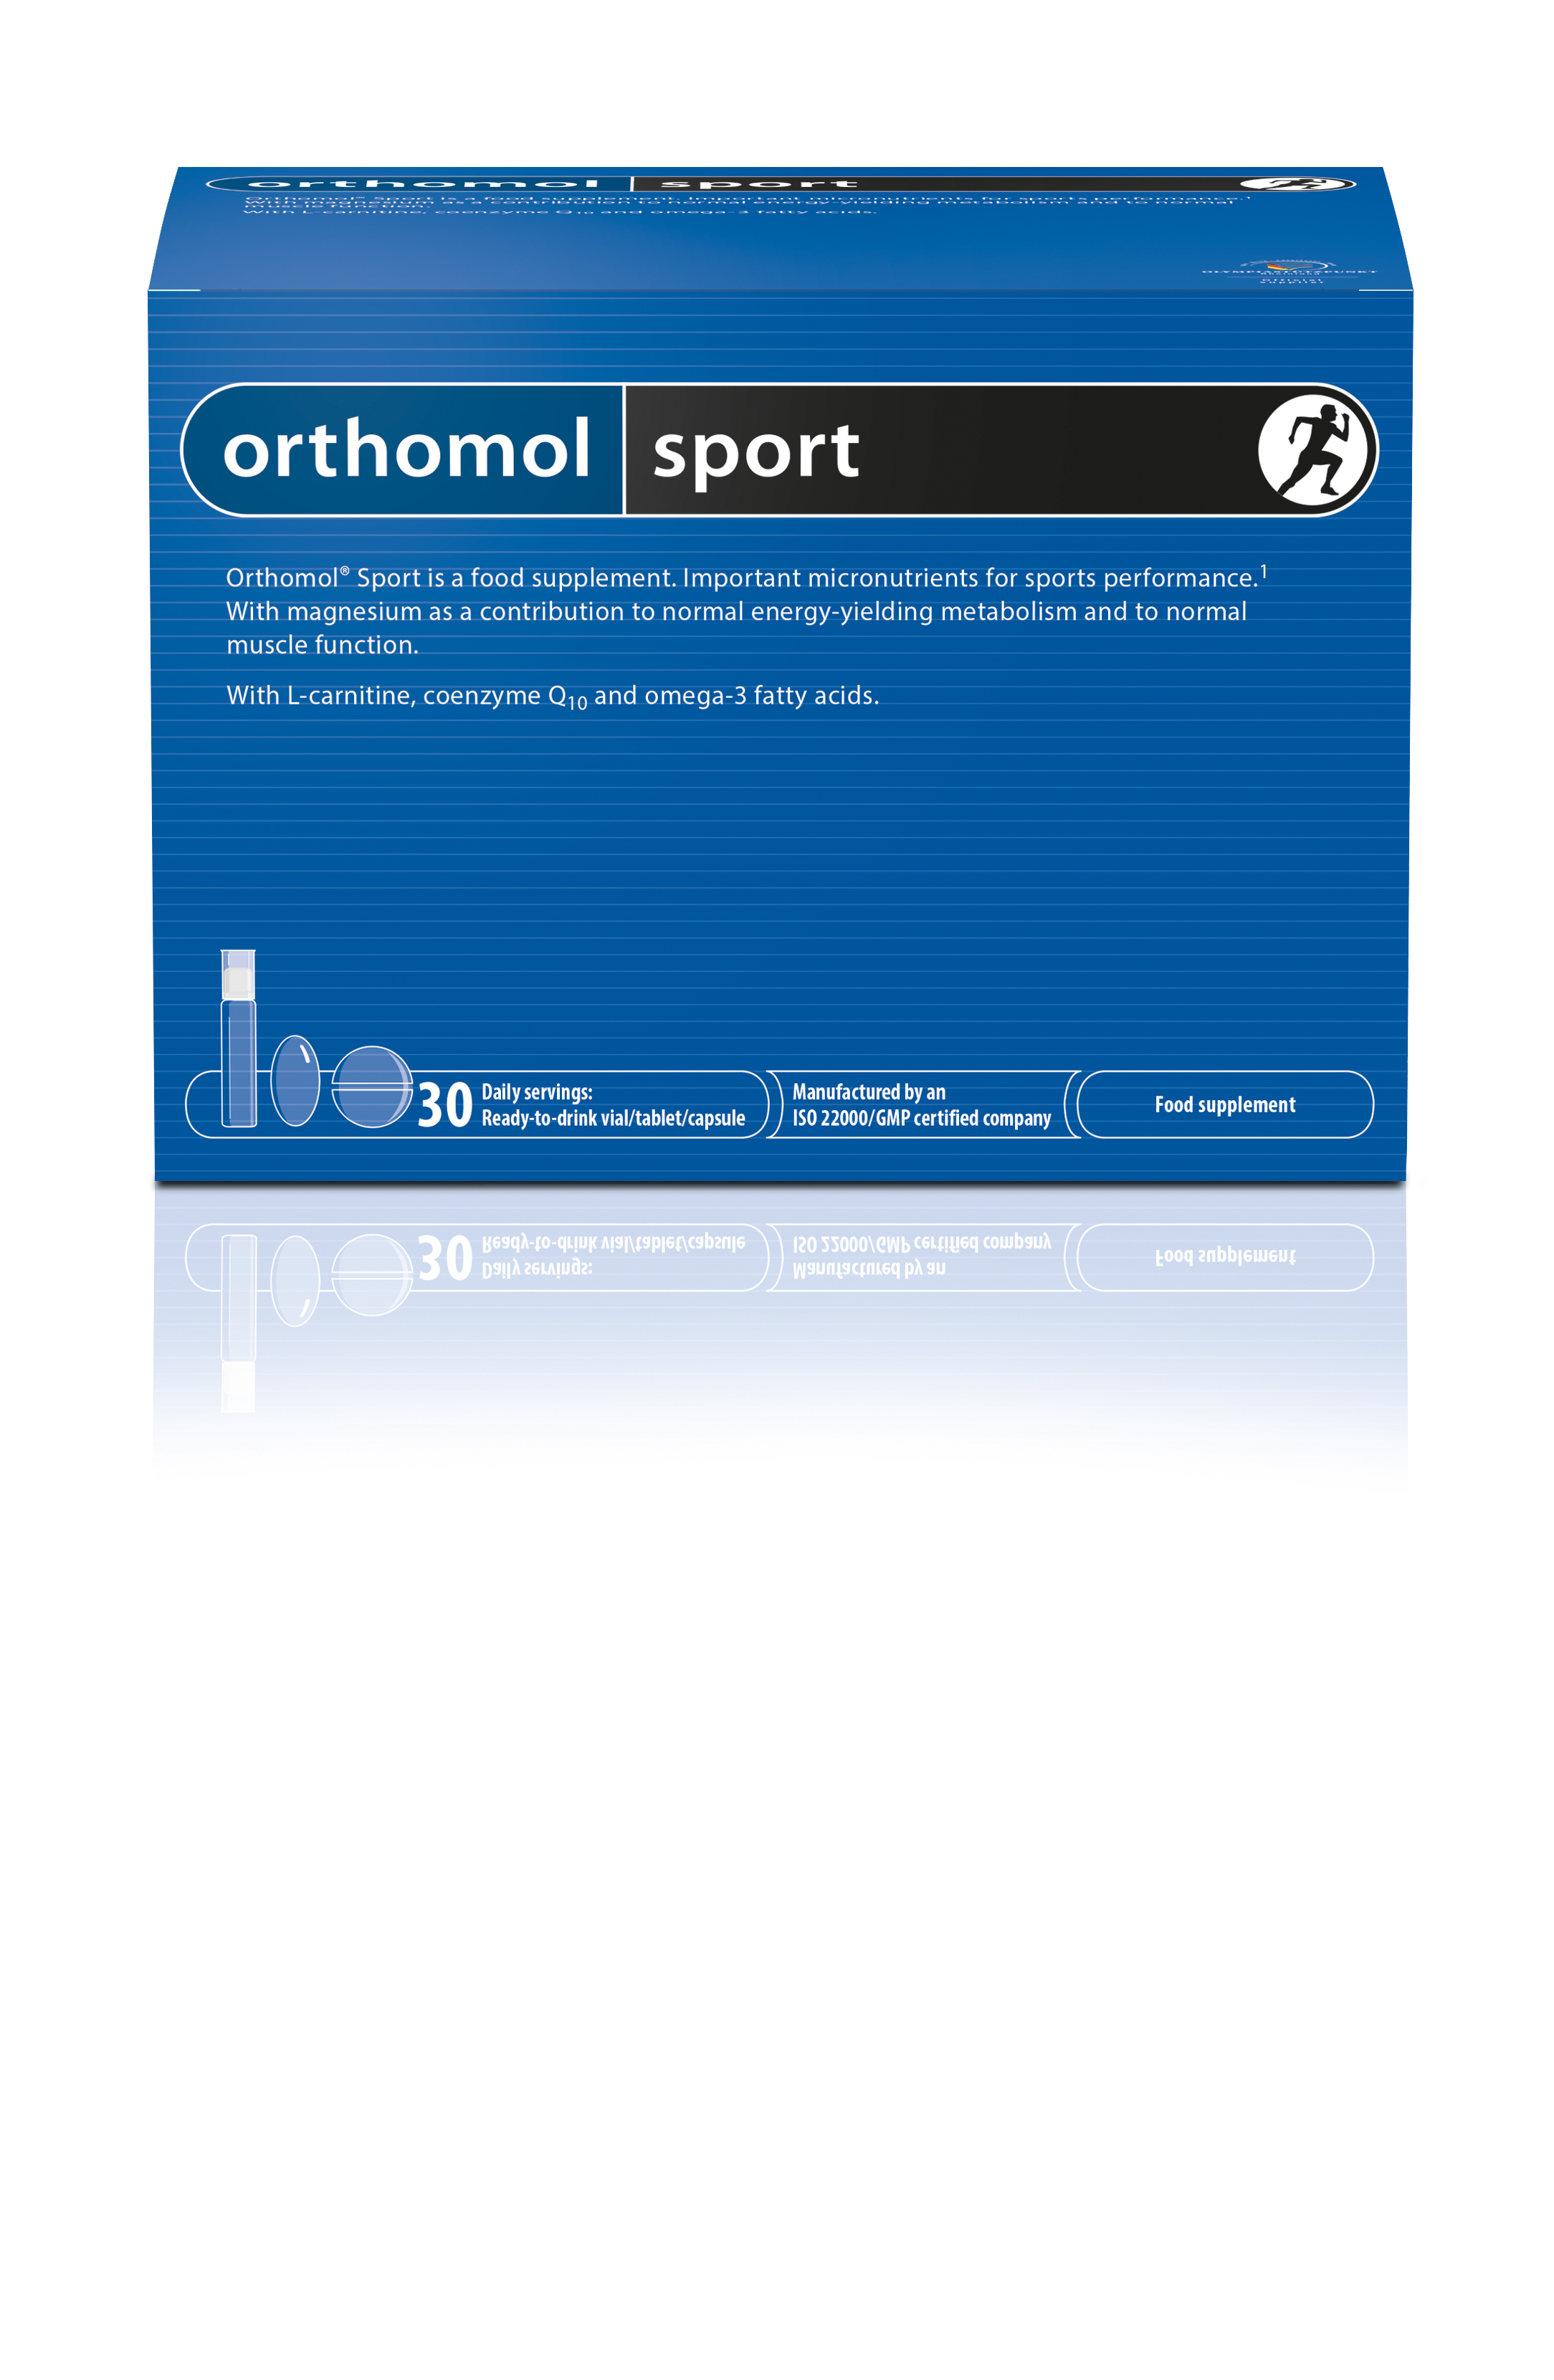 Orthomol sport